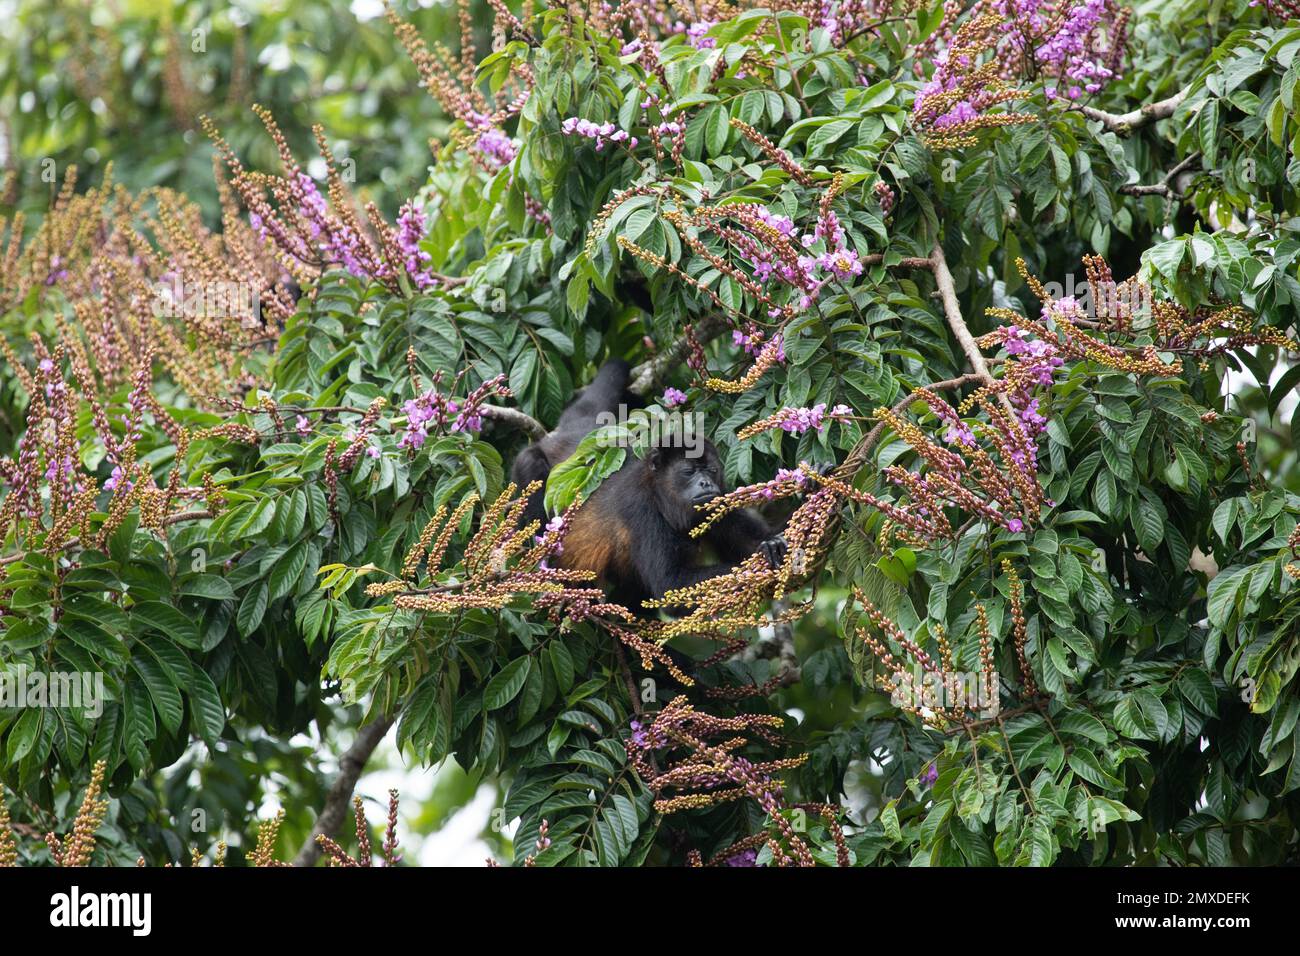 A close-up shot of a black monkey on a floral bush Stock Photo